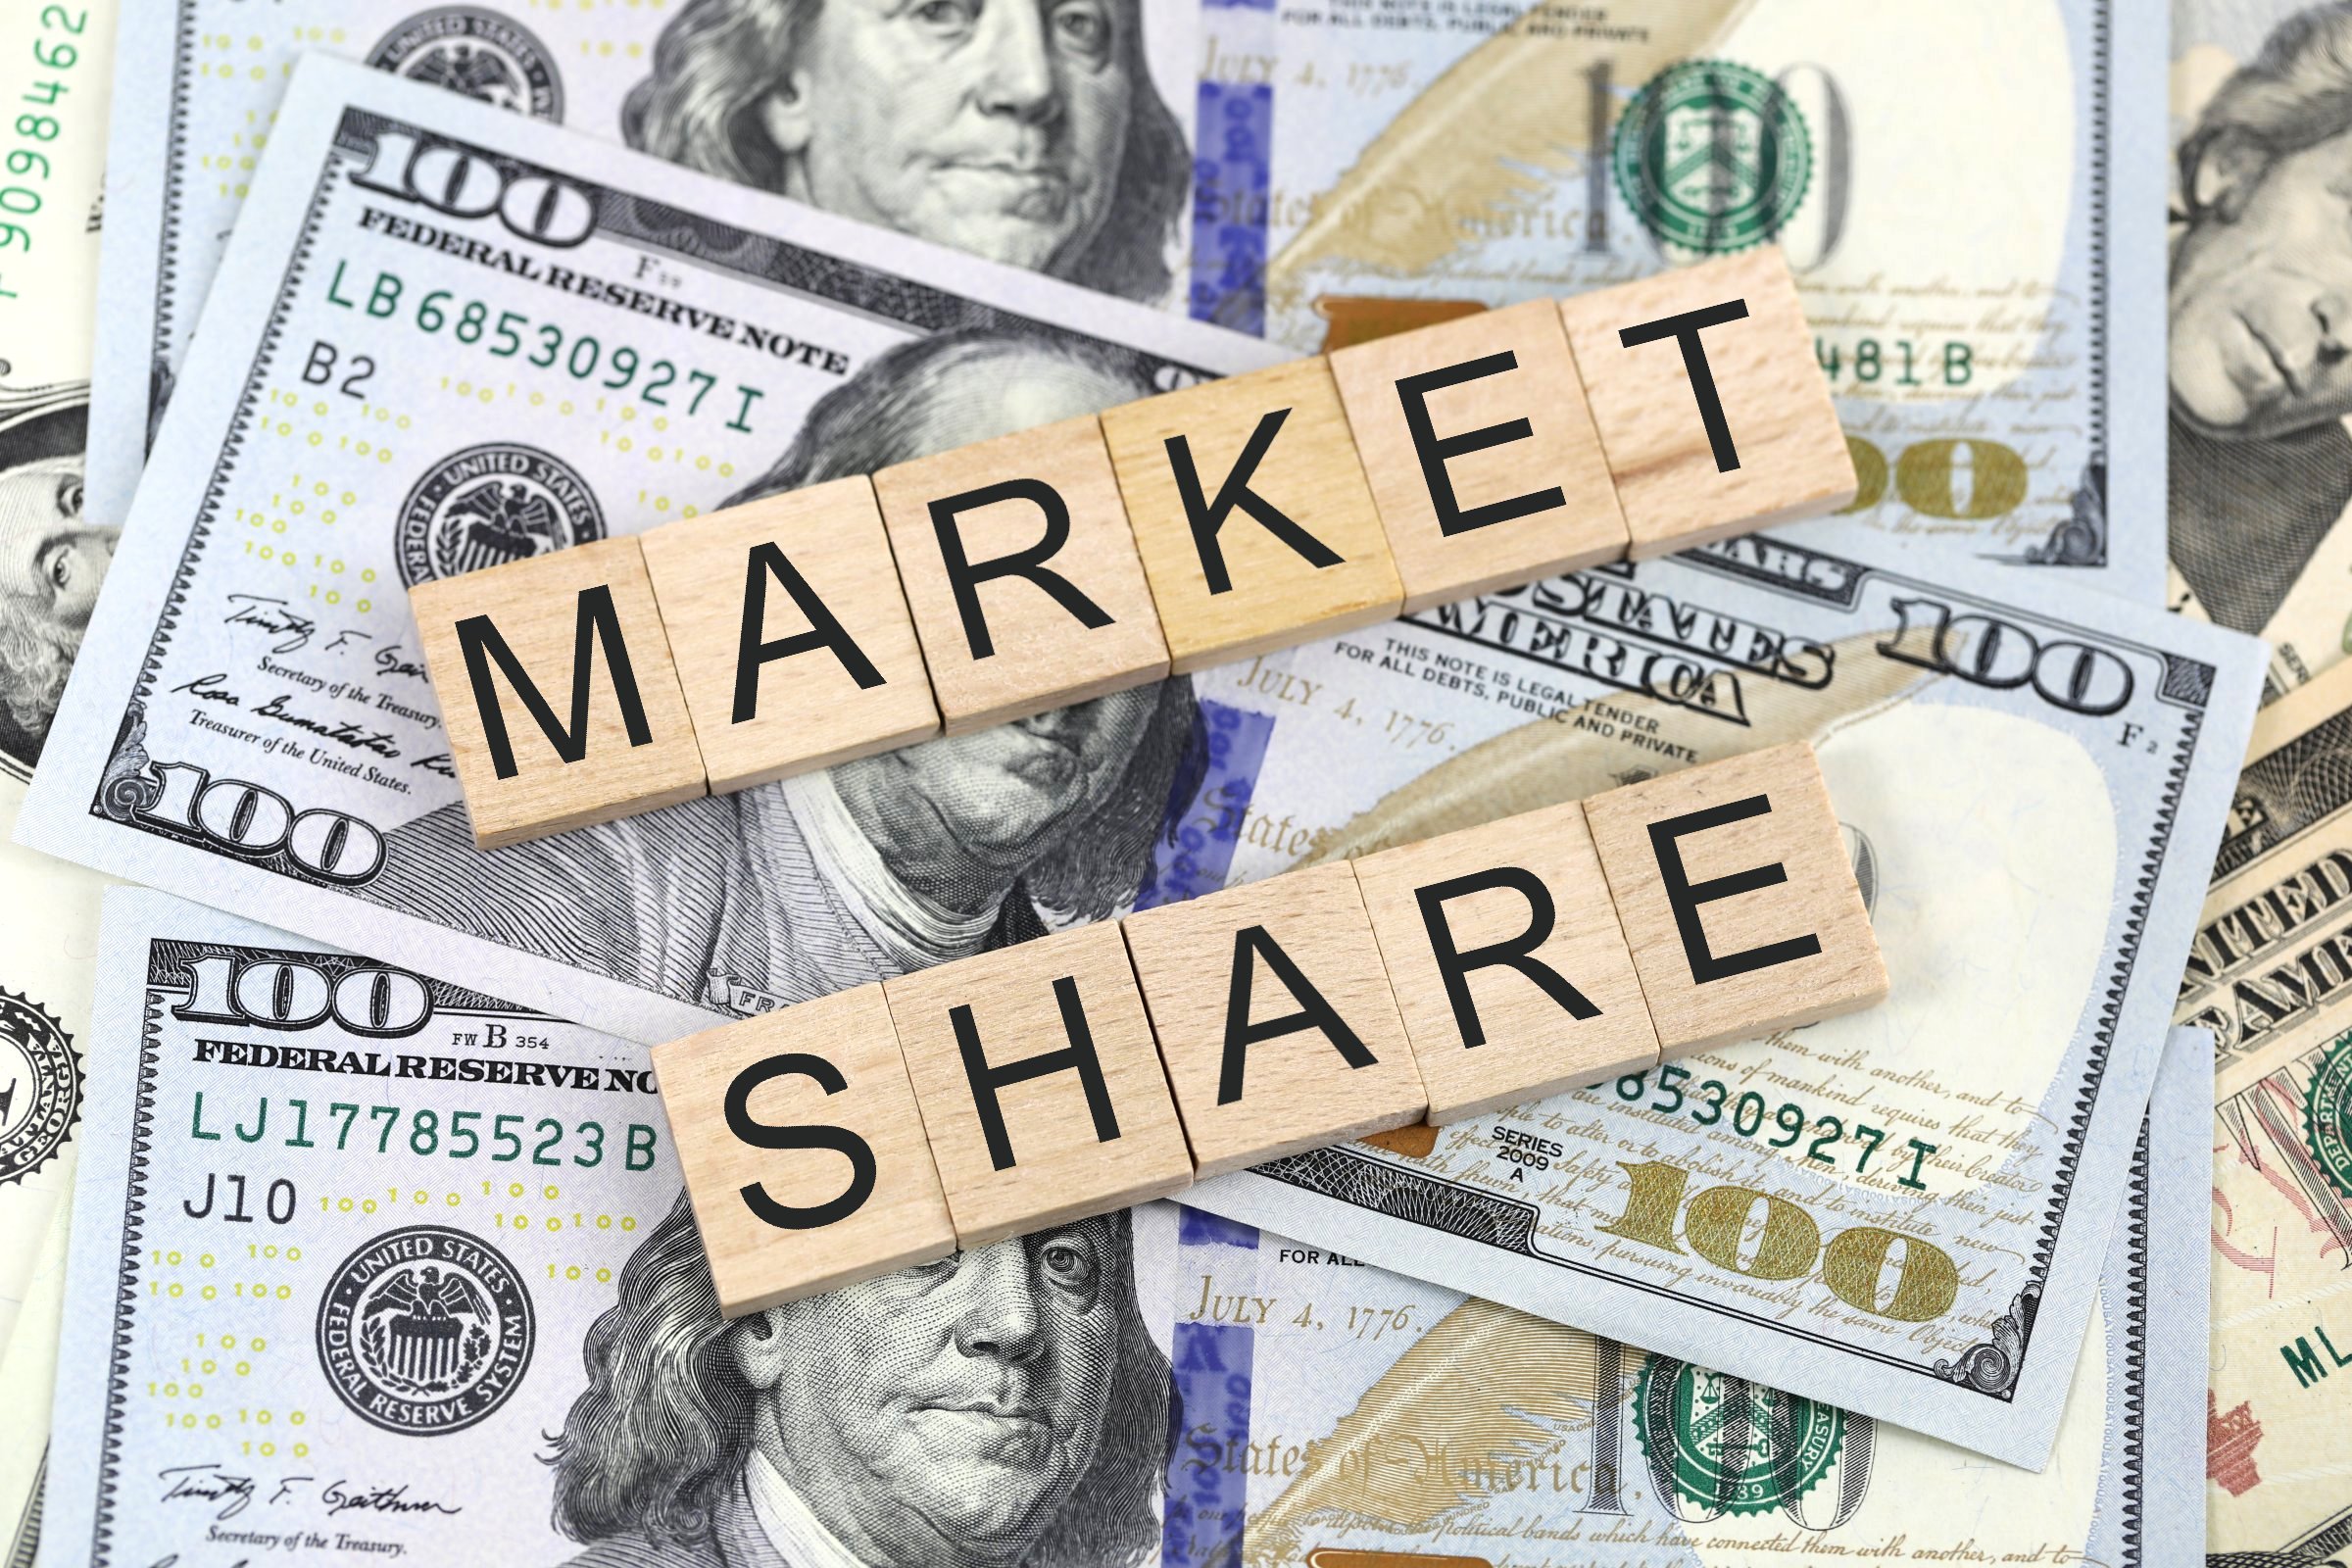 market share